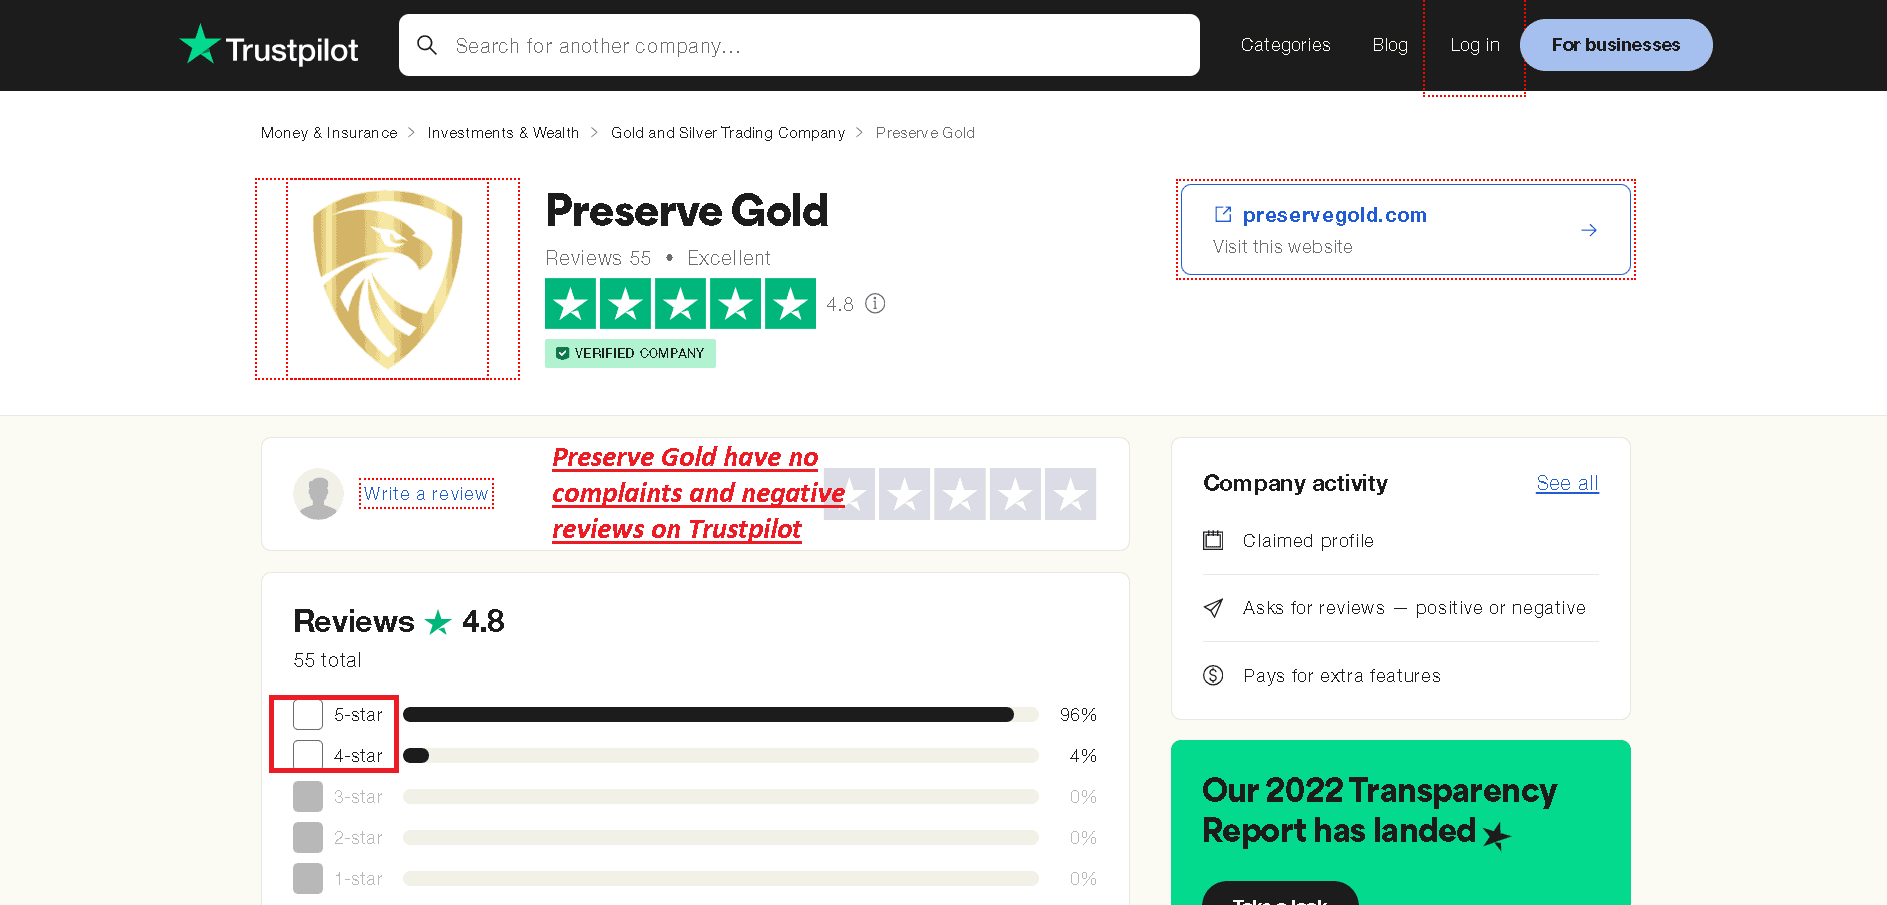 Preserve Gold have no complaints and negative reviews on Trustpilot